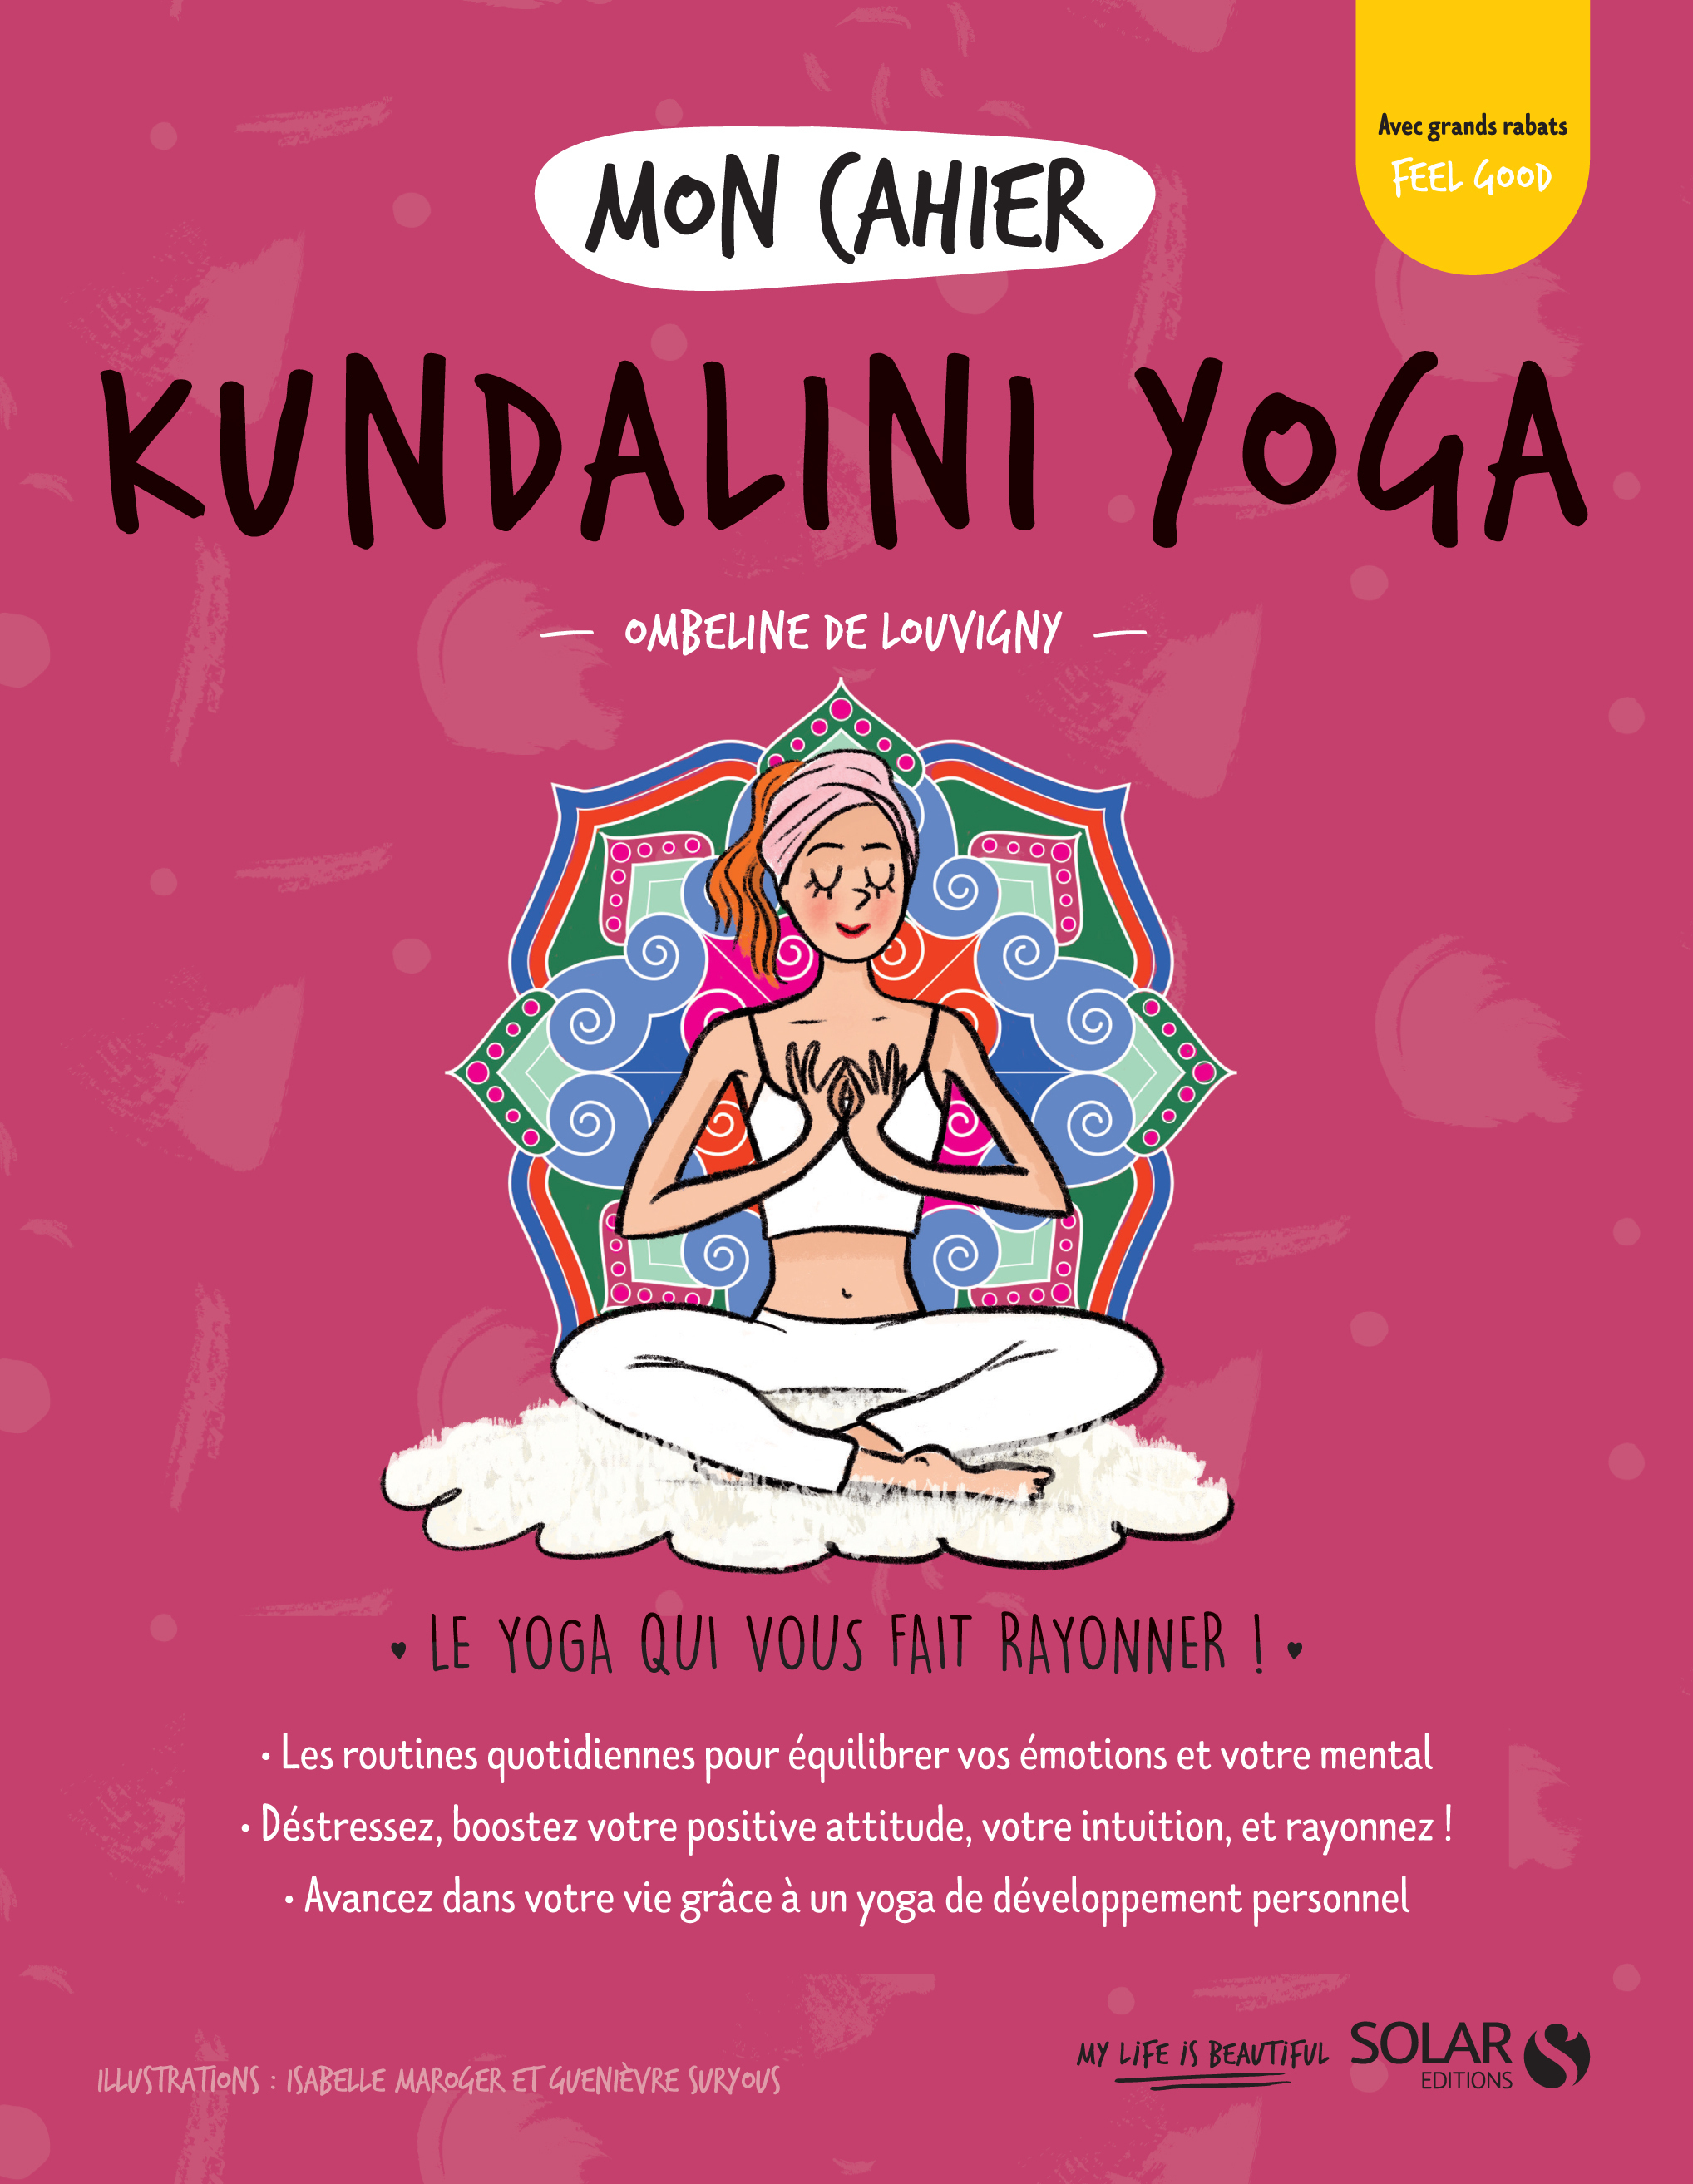 Mon Cahier Kundalini Yoga ; livre ; kundalini ; yoga ; Ombeline de Louvigny